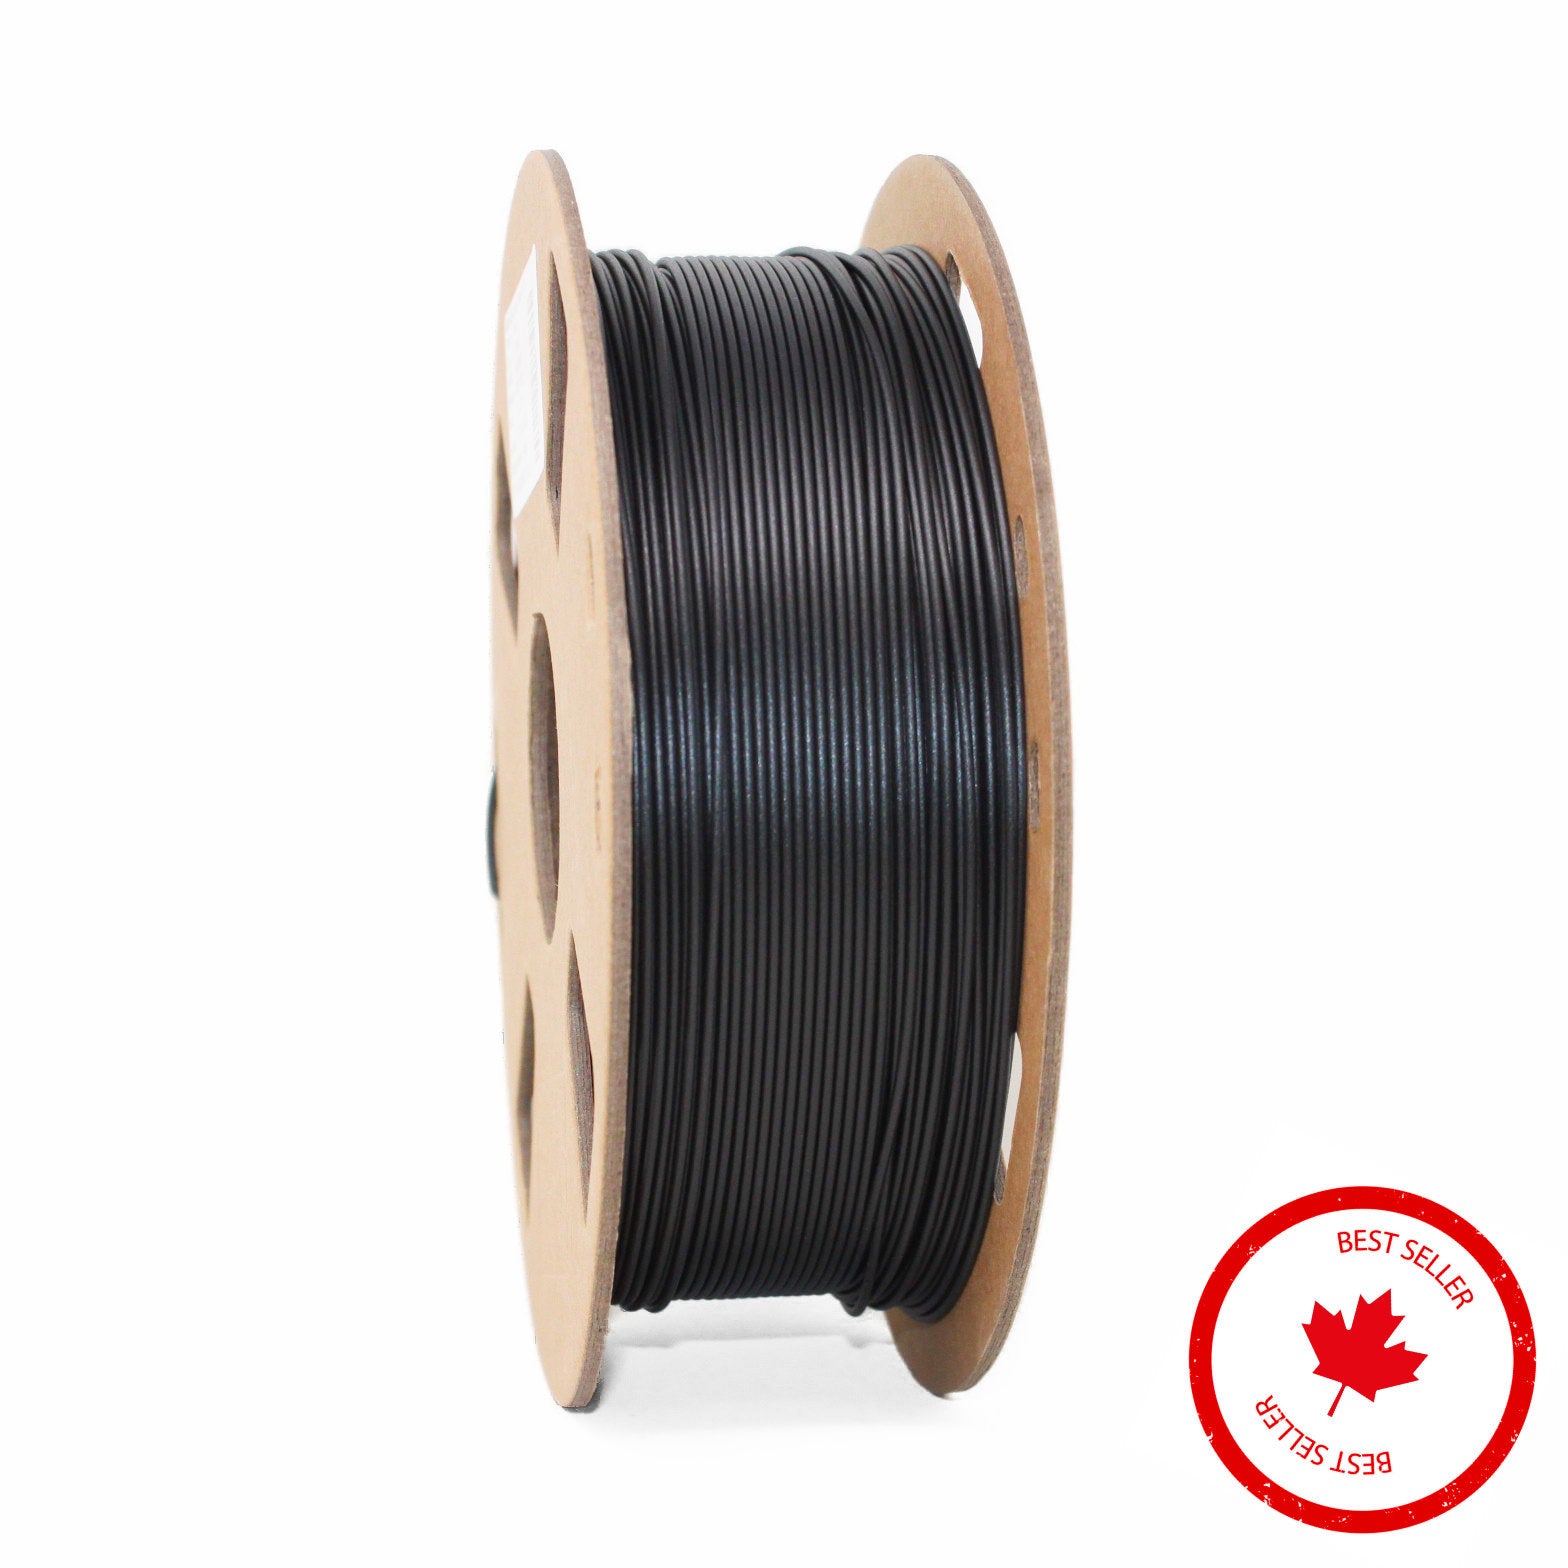 ColorFabb Black LW-ASA Filament - 1.75mm (0.65kg)